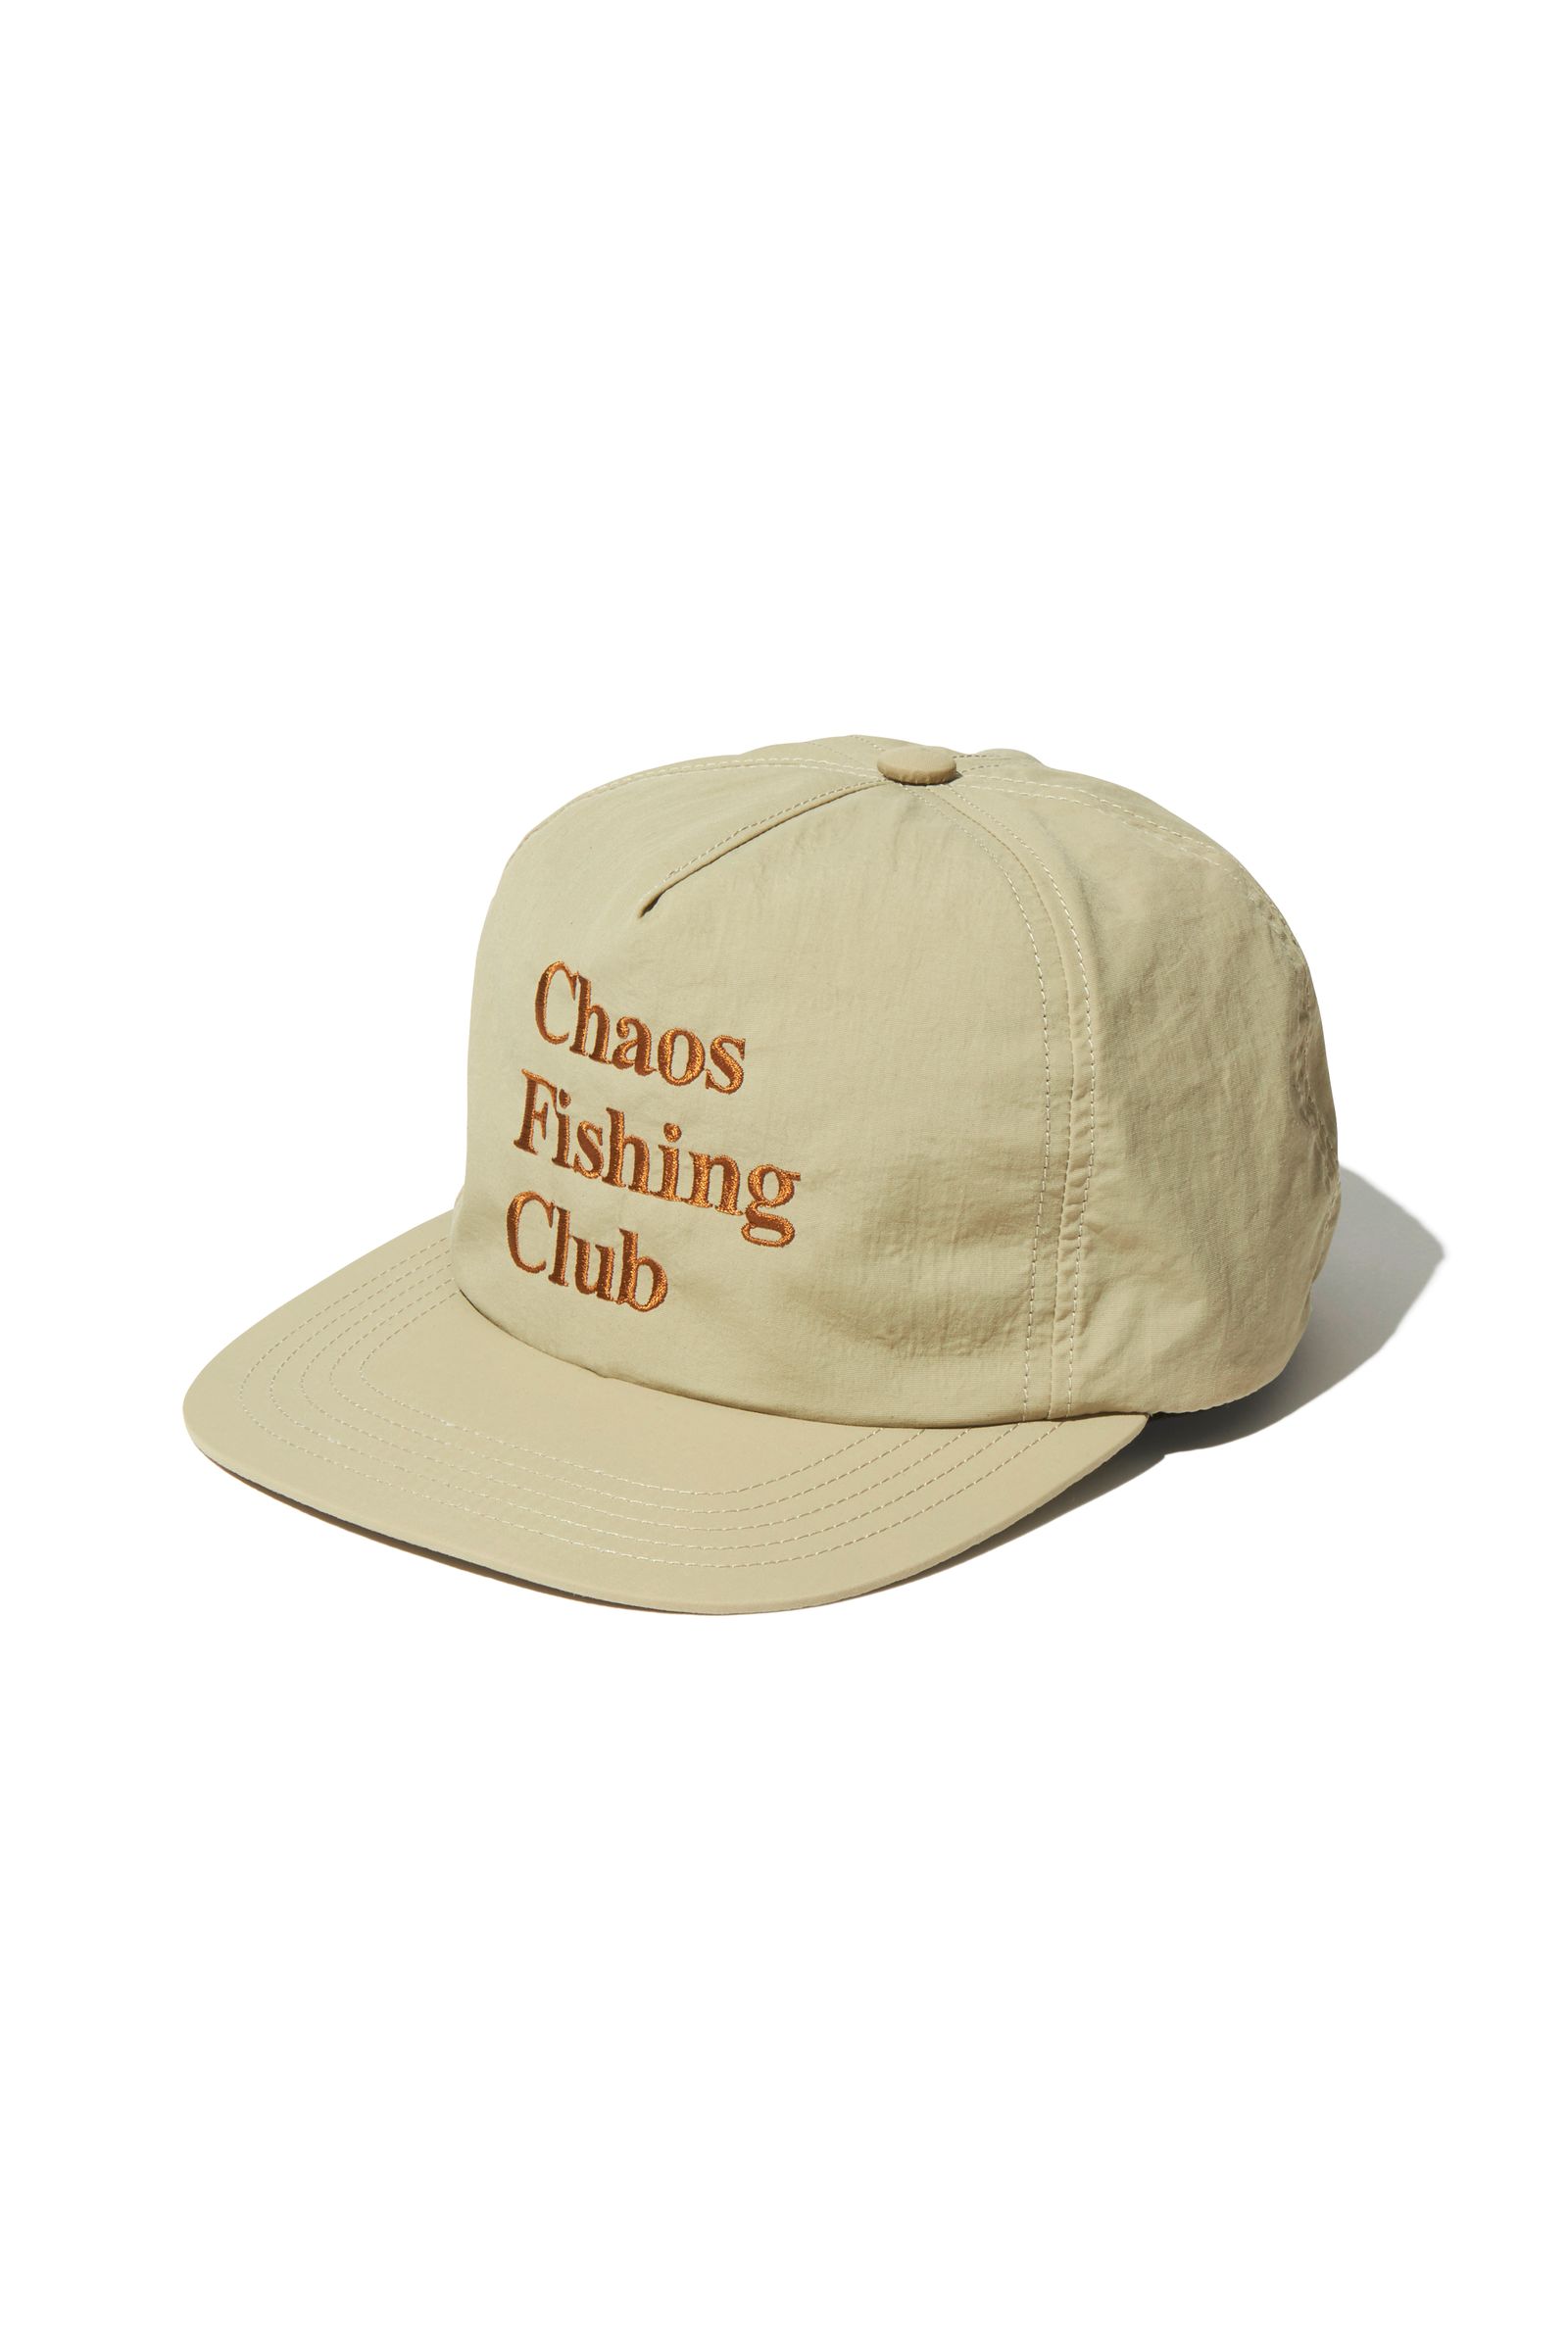 Chaos Fishing Club - LOGO CAP. | Stripe Online Store